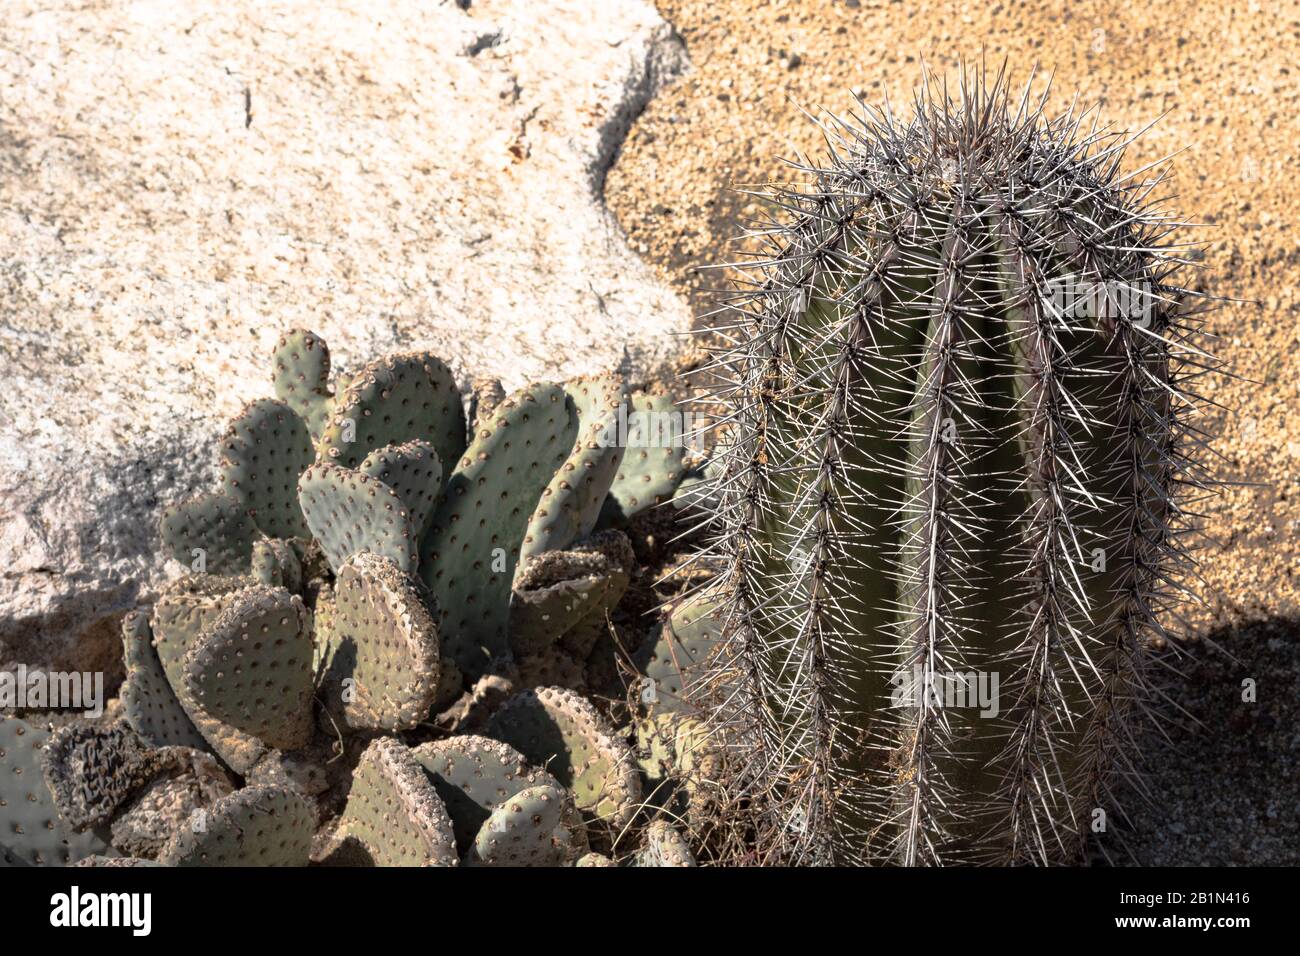 Closeup detalis of southwestern desert cactus with sharp spines against granite rock background Stock Photo